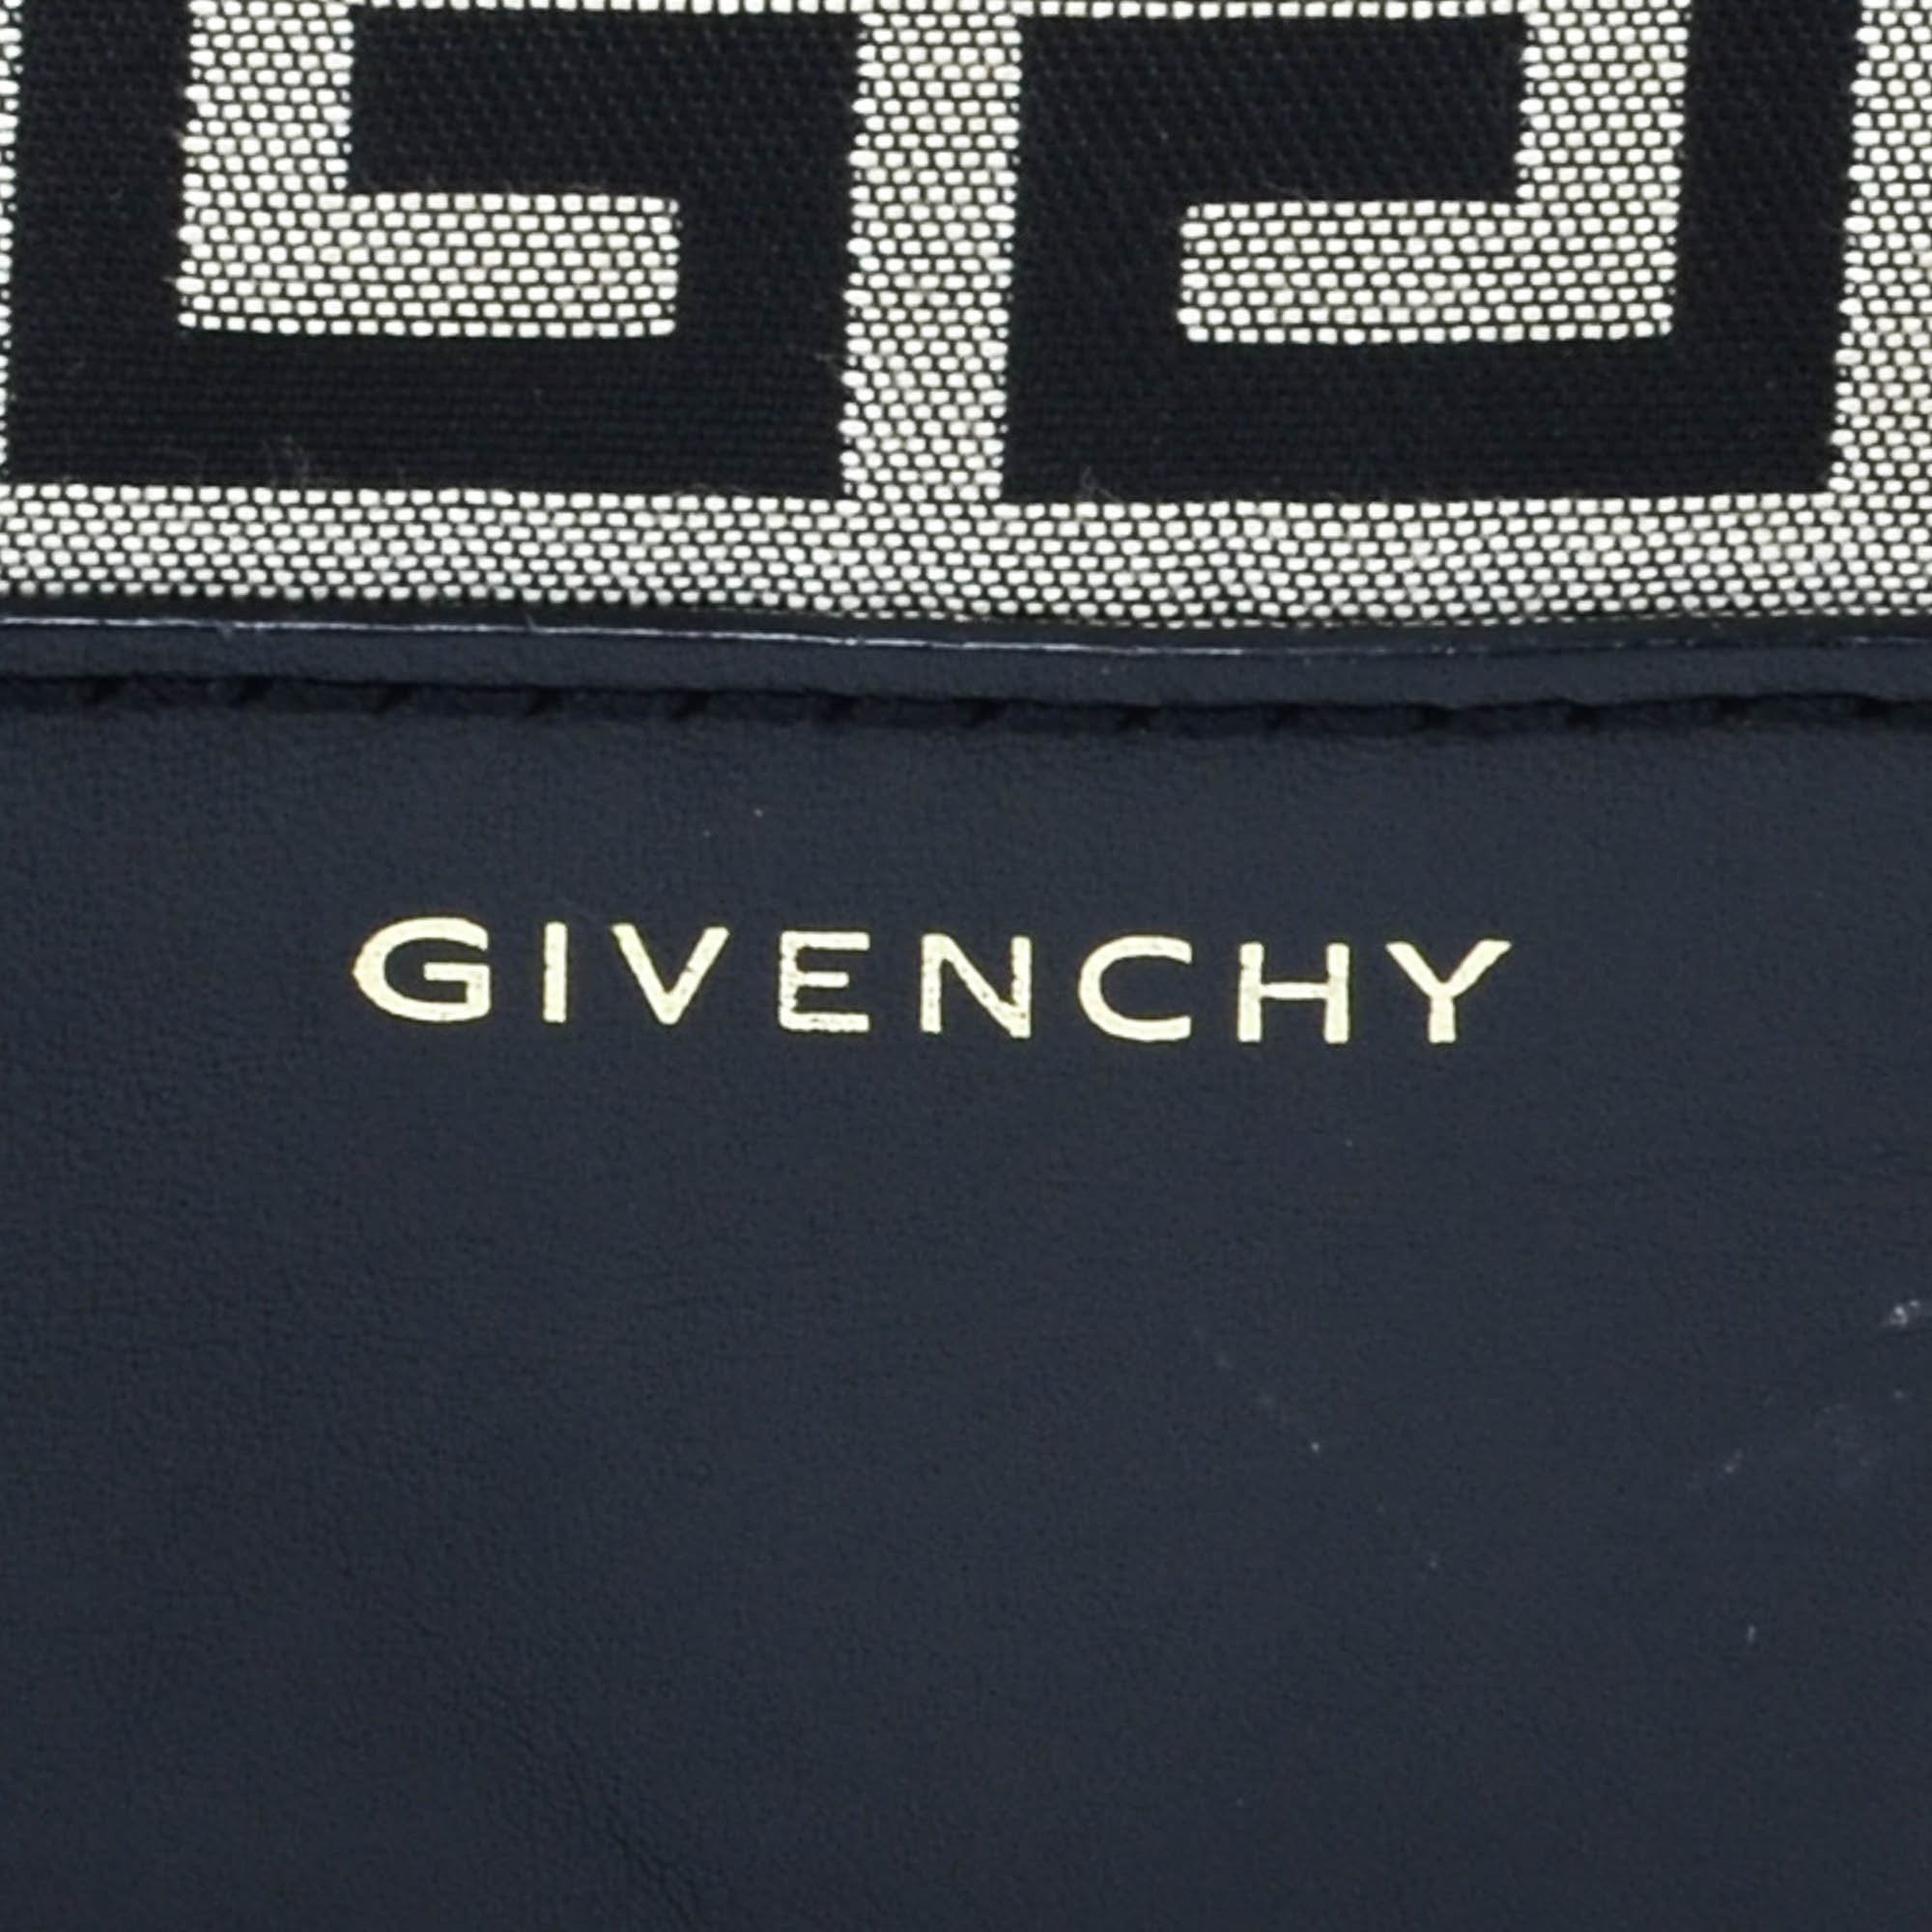 Givenchy Bicolor Monogram Canvas Leather Shoulder Bag - My Luxury Bargain